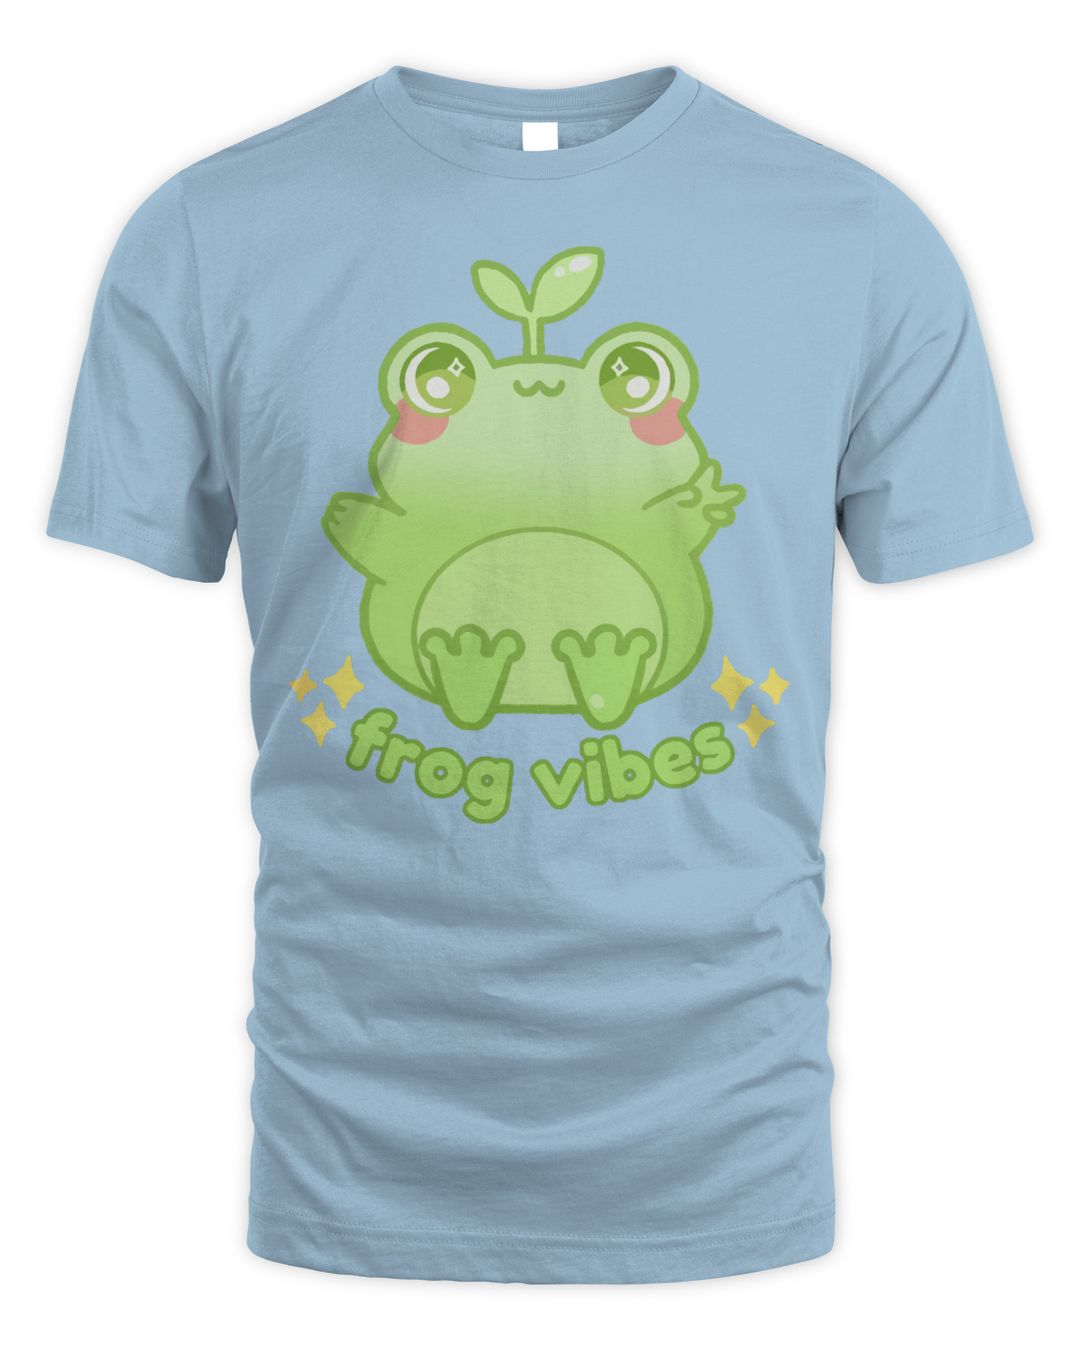 Froggycrossing Merch Frog Vibes Shirt